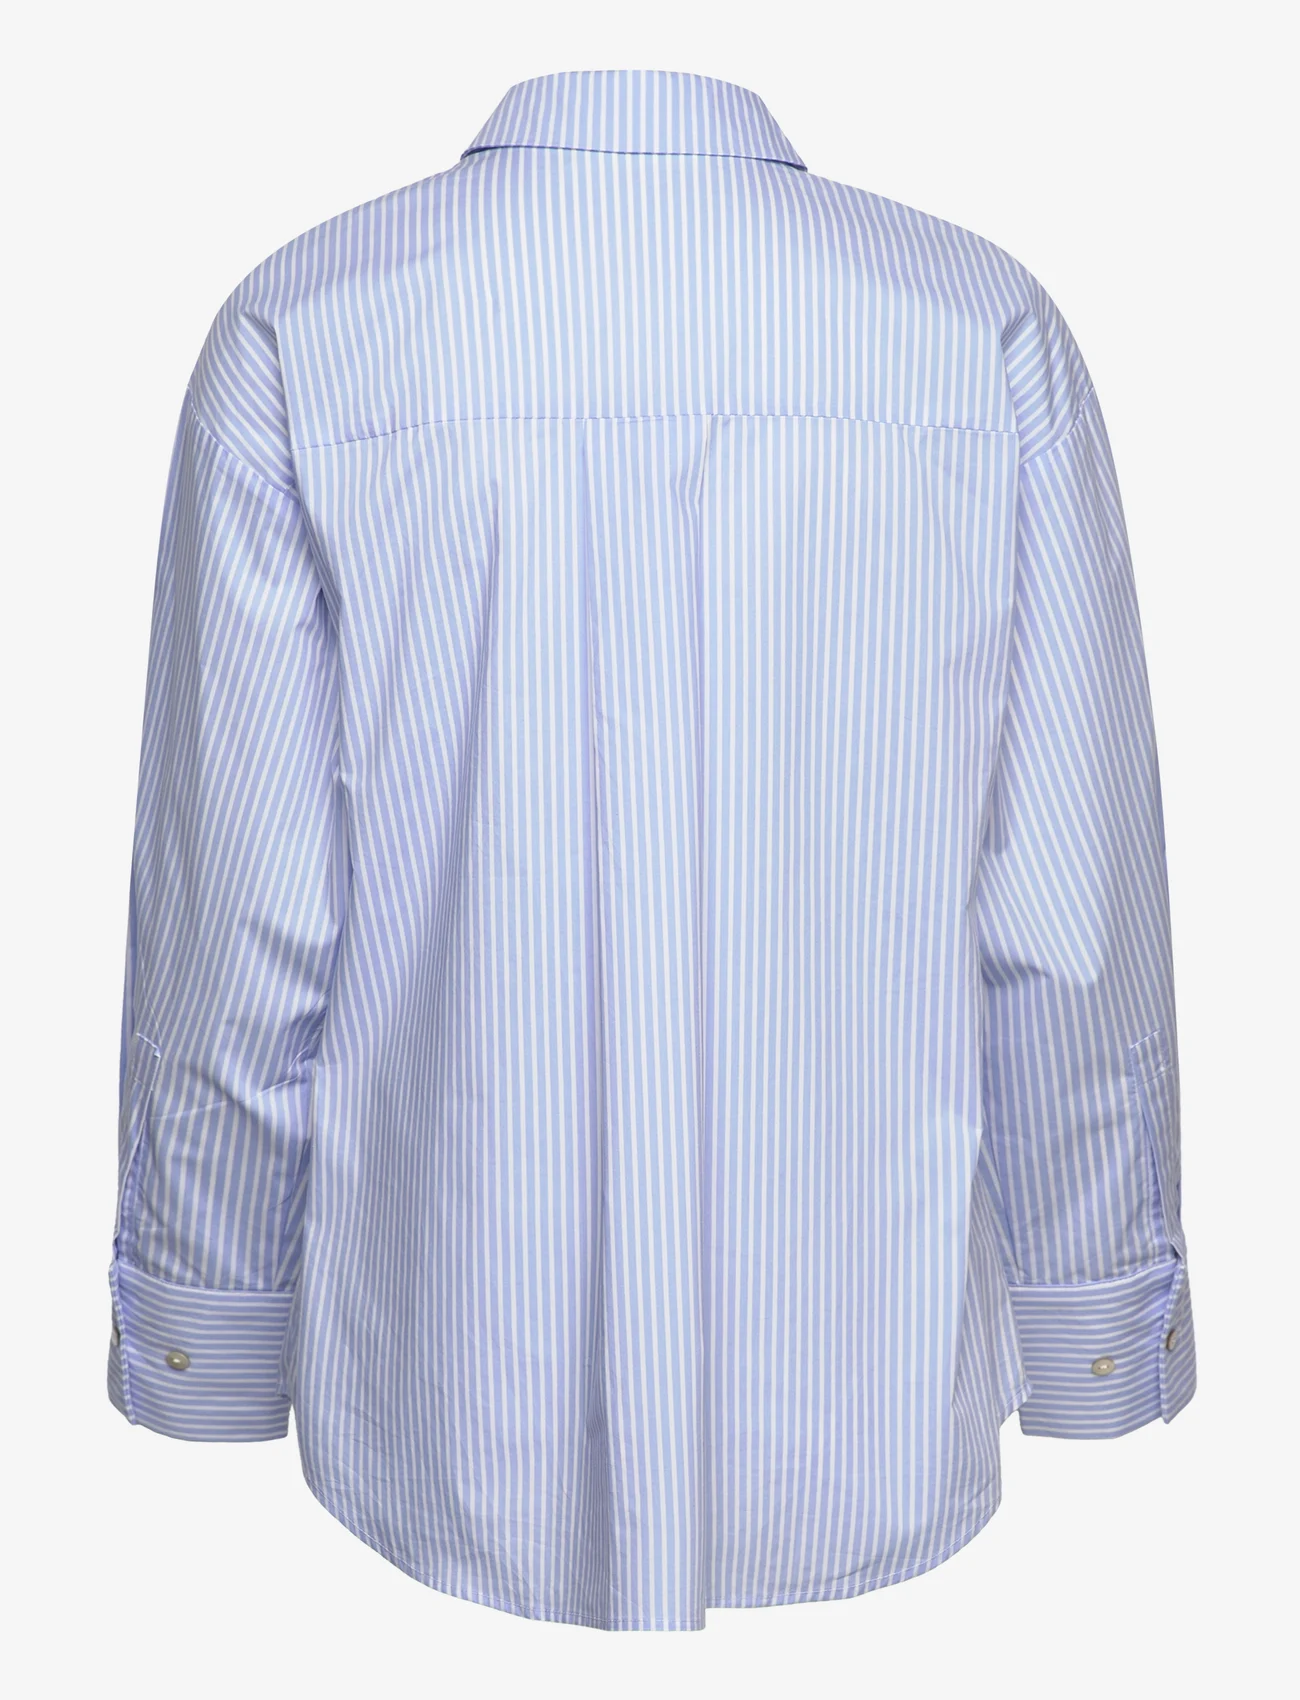 Sofie Schnoor - Shirt - langærmede skjorter - light blue striped - 1